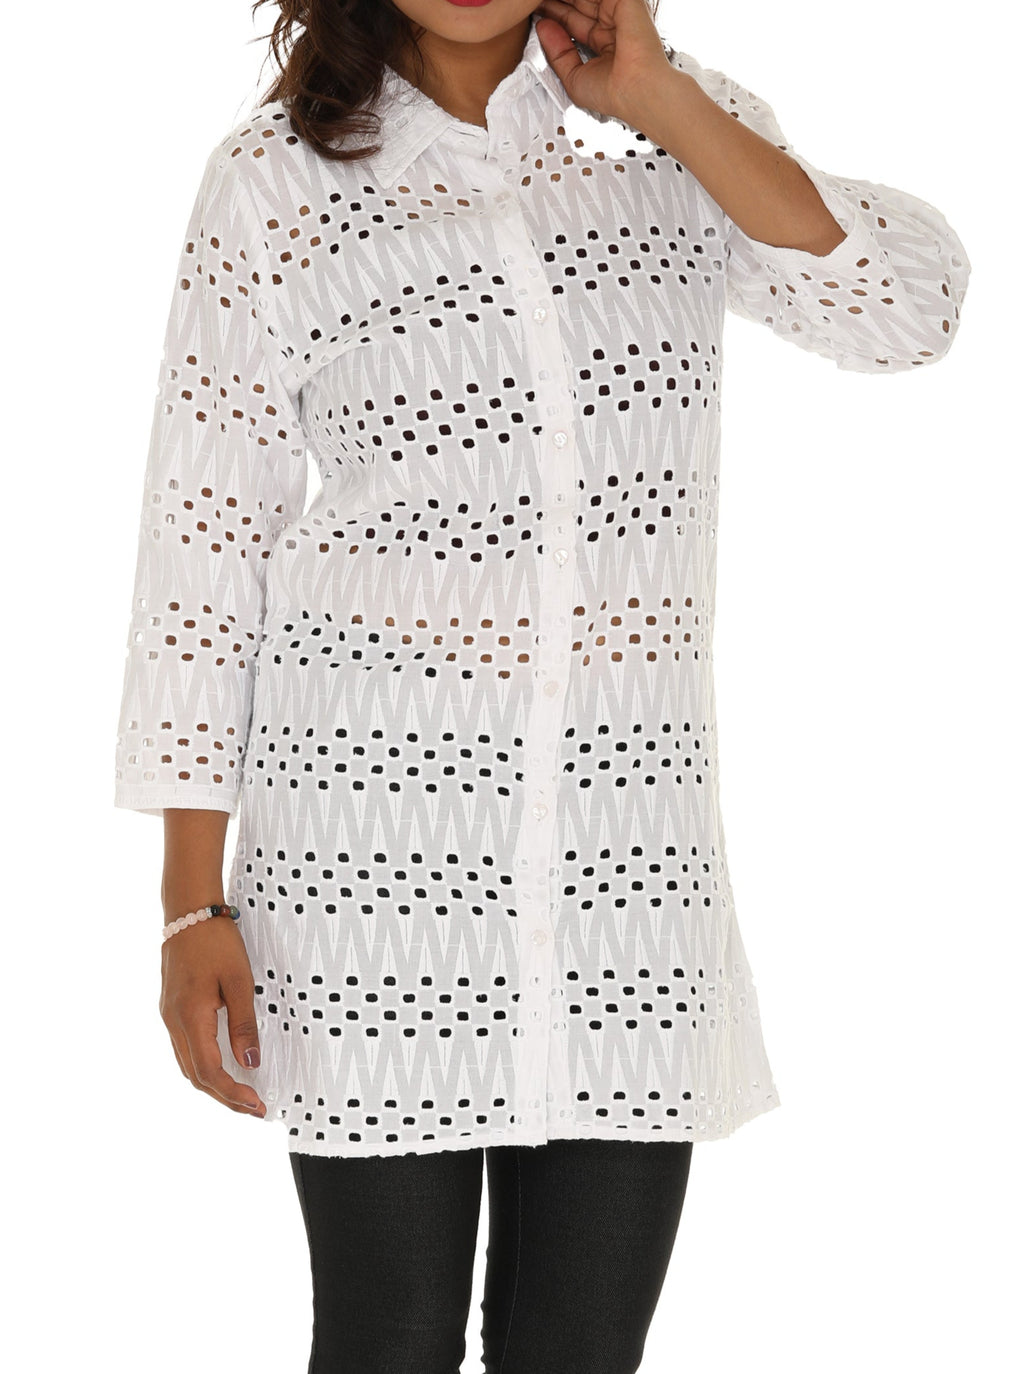 White Eyelet Fabric Button-up Shirt - Shoreline Wear, Inc.